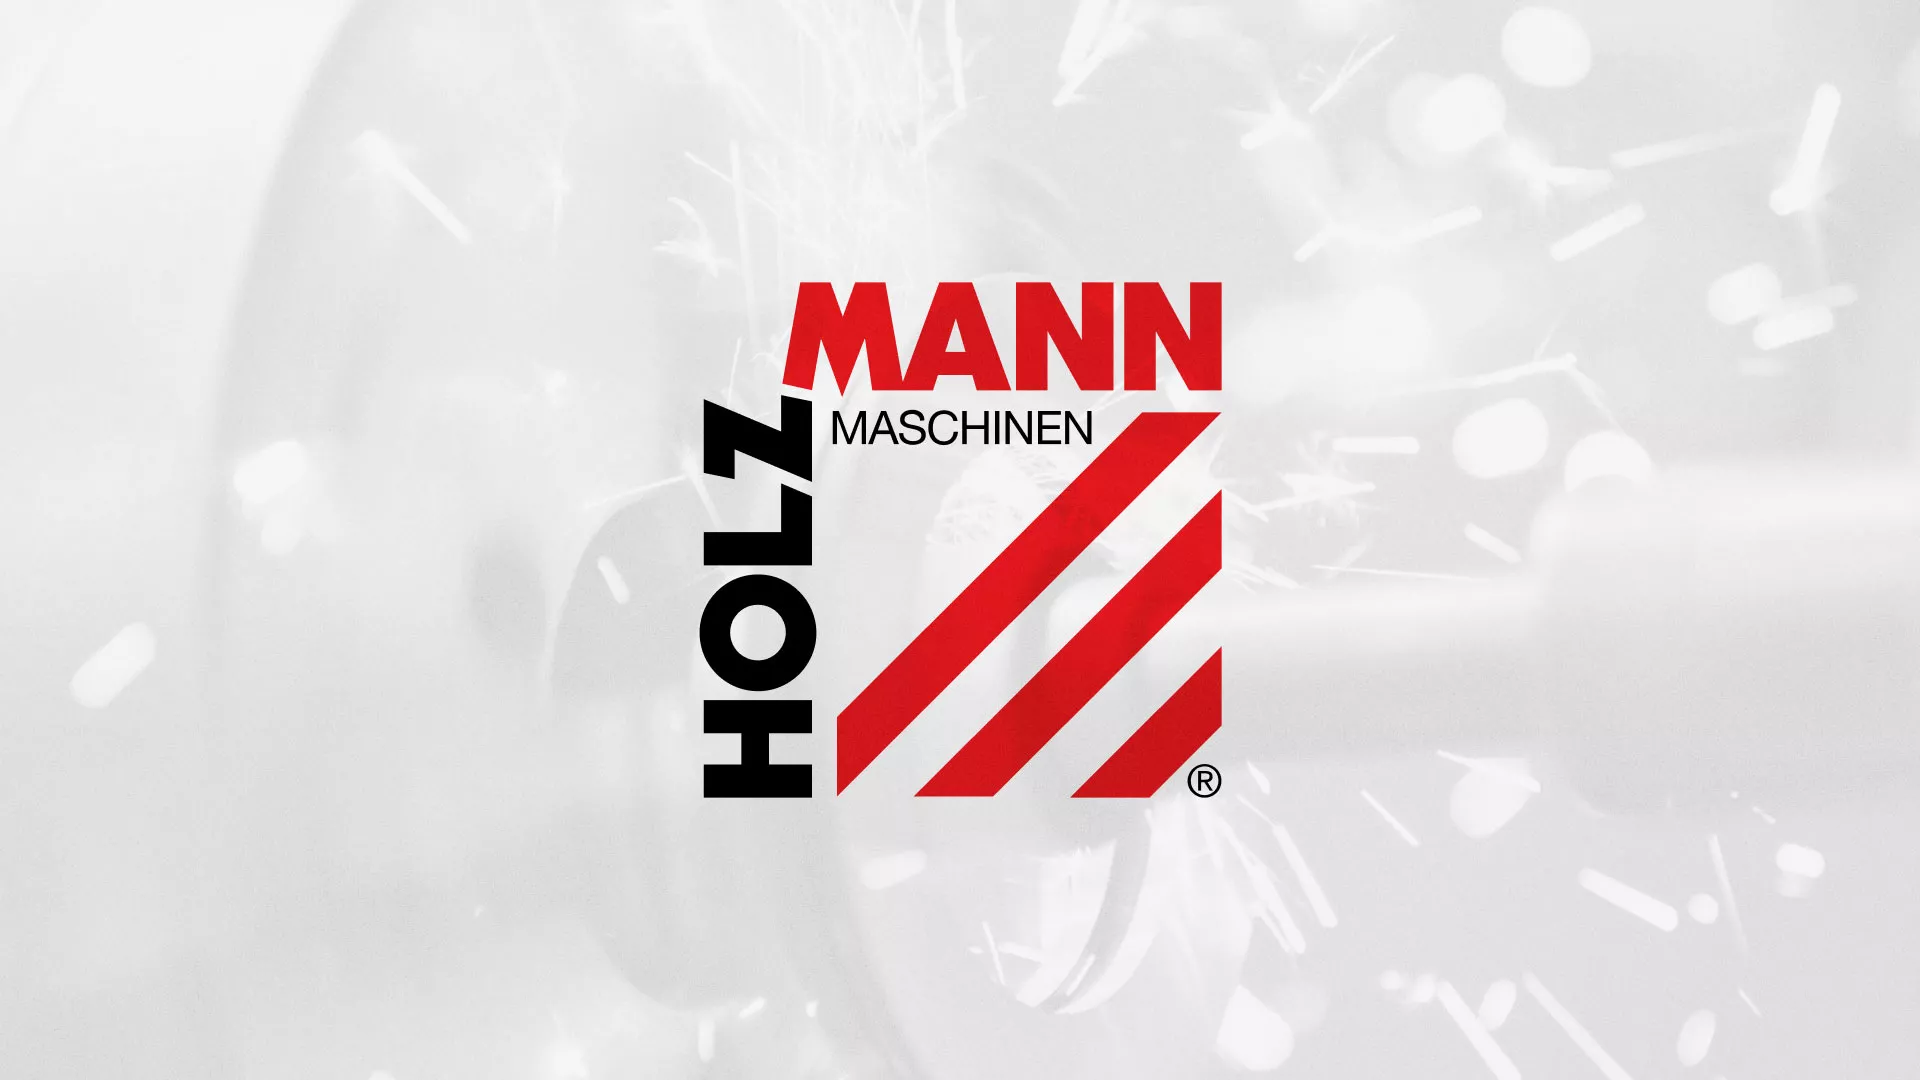 Создание сайта компании «HOLZMANN Maschinen GmbH» в Азнакаево